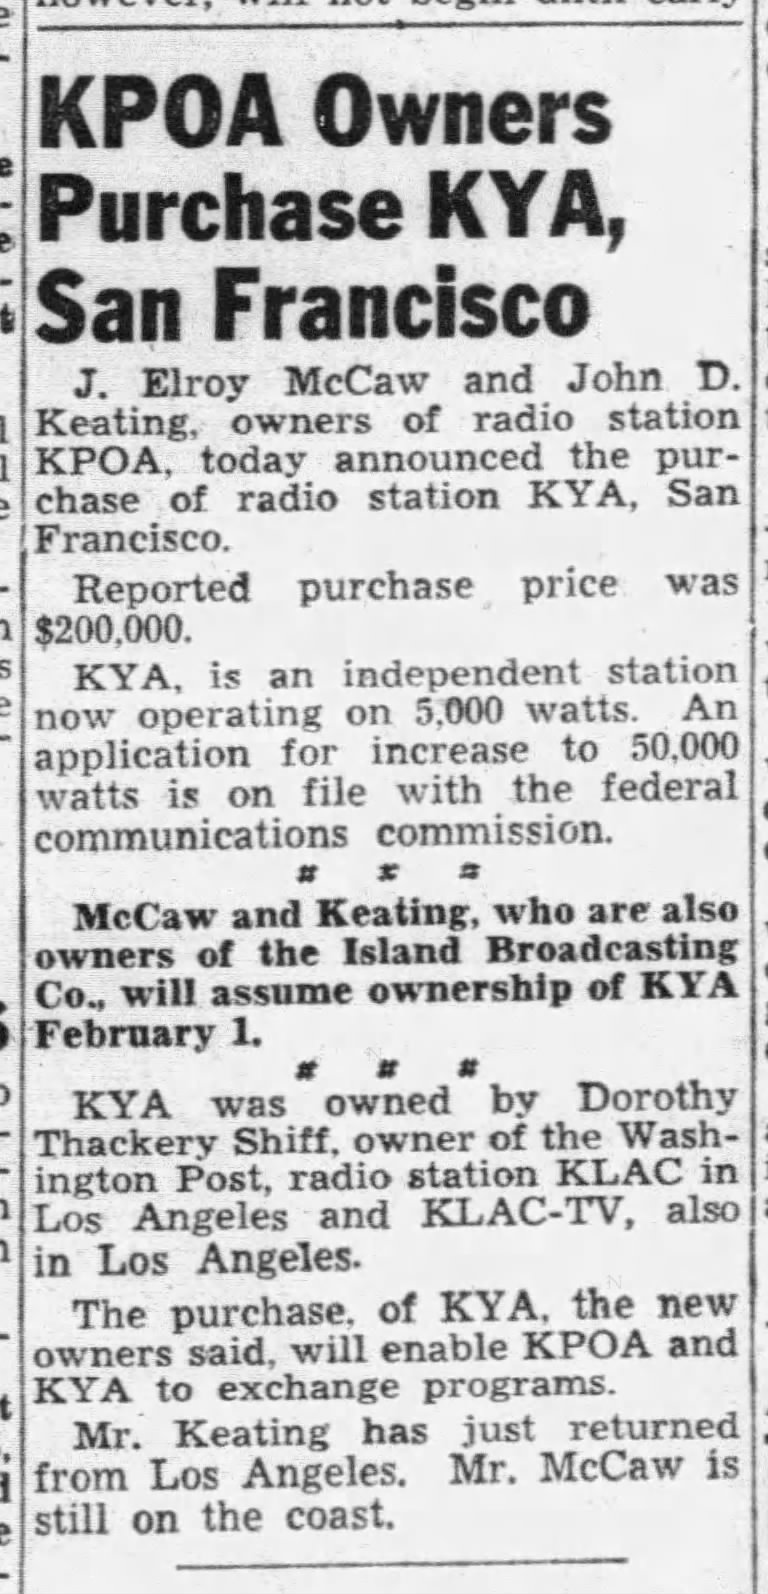 KPOA Owners Purchase KYA, San Francisco